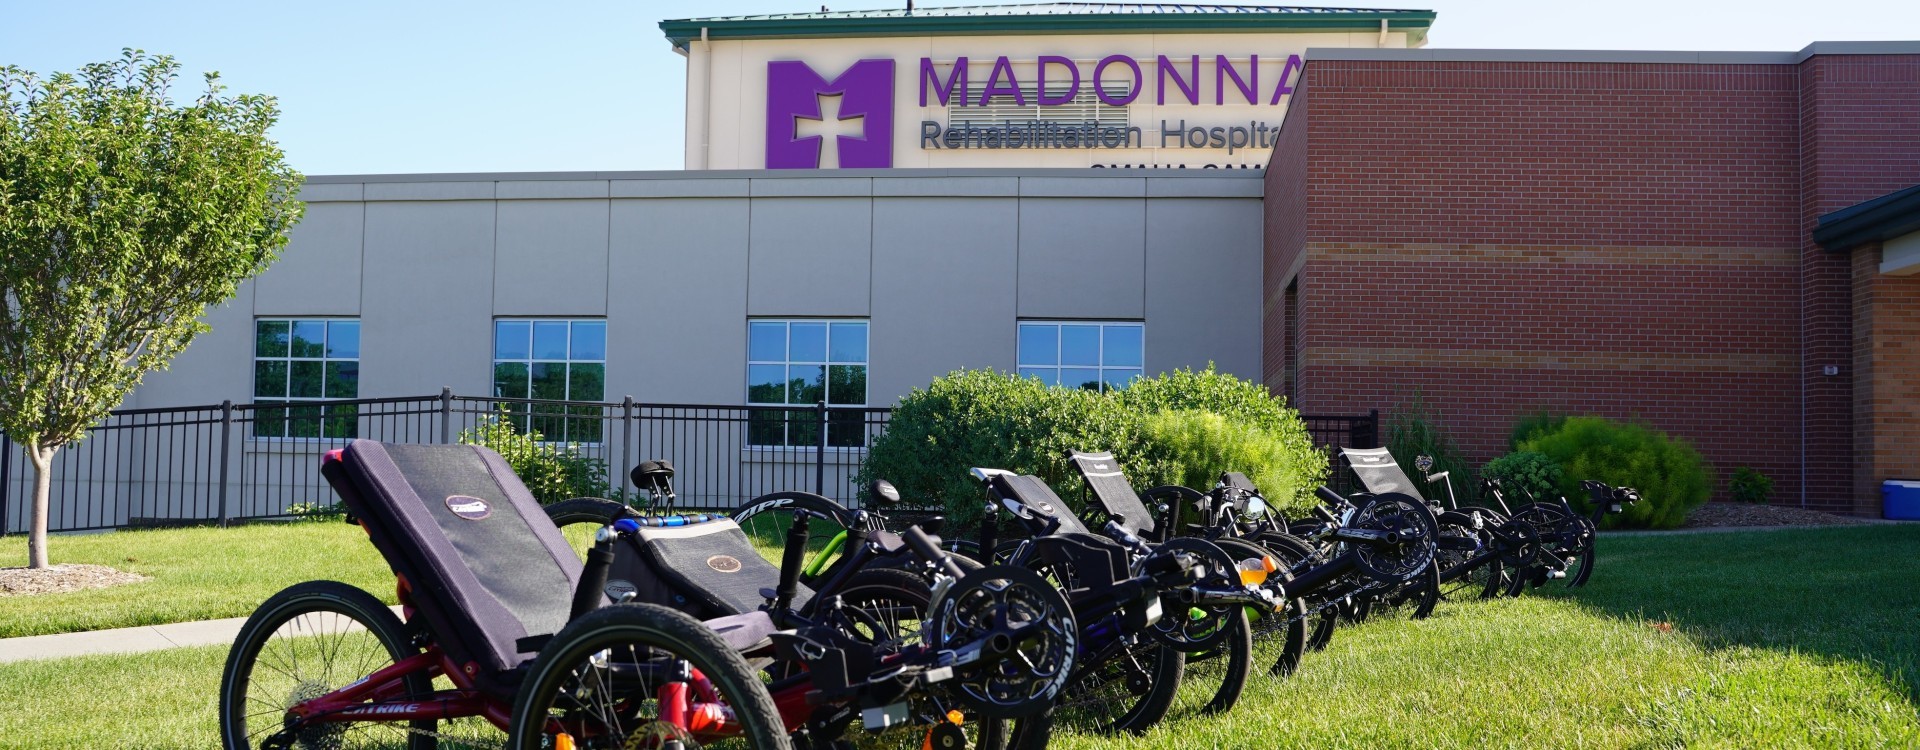 Madonna Rehabilitation Hospitals